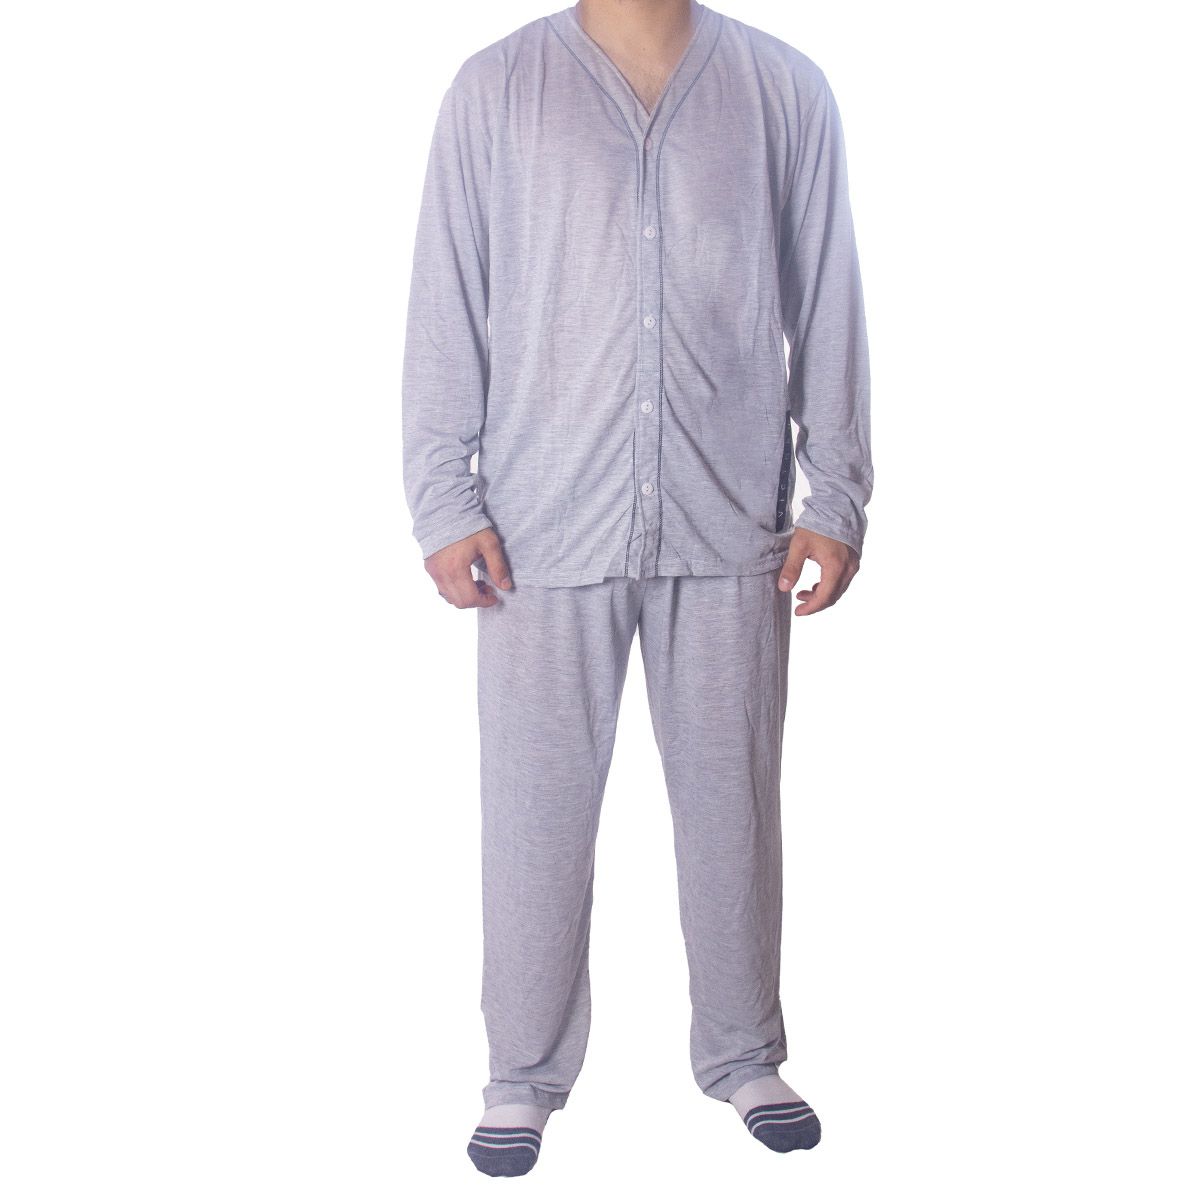 Pijama inverno de botão mescla masculino Victory